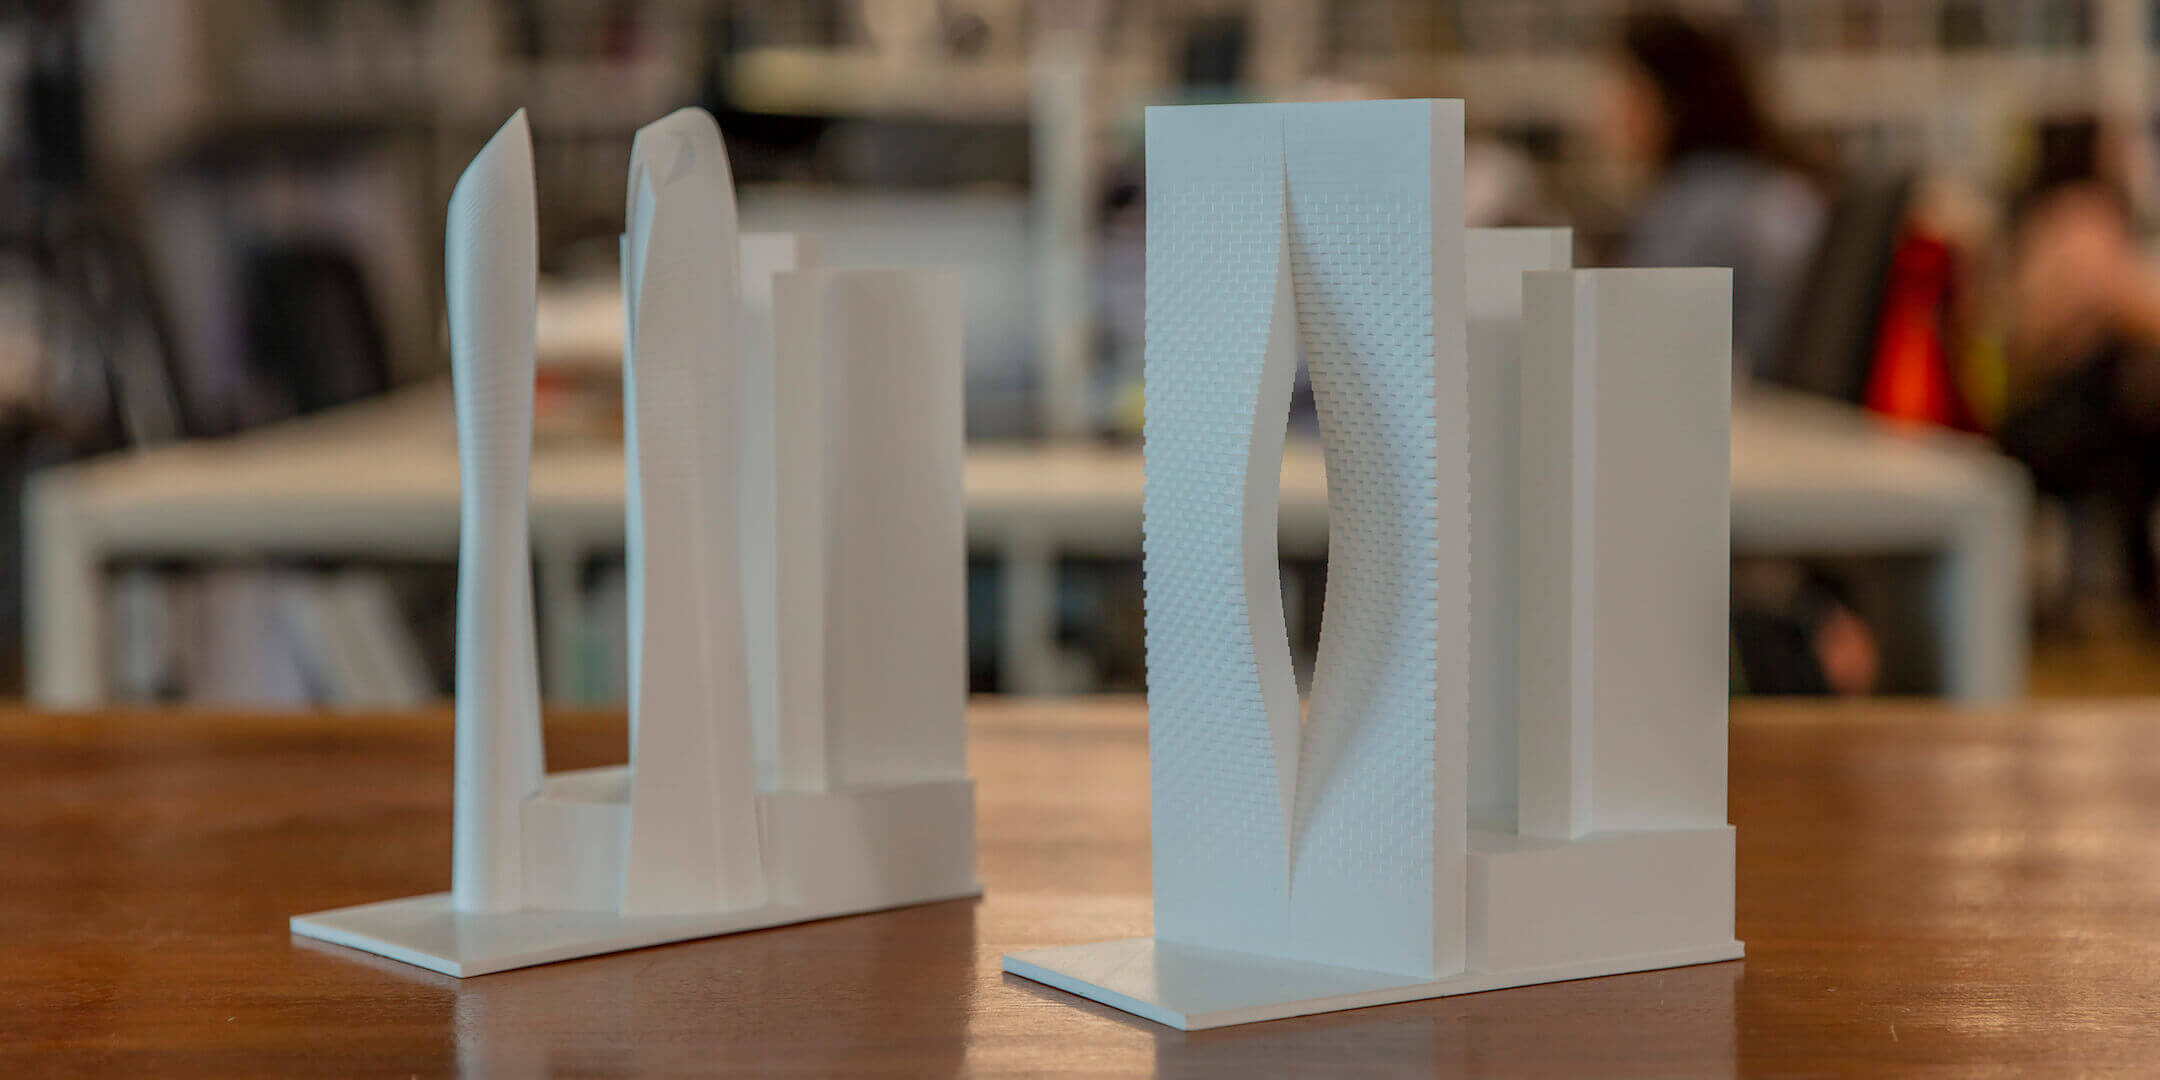 3D printed skyscraper models